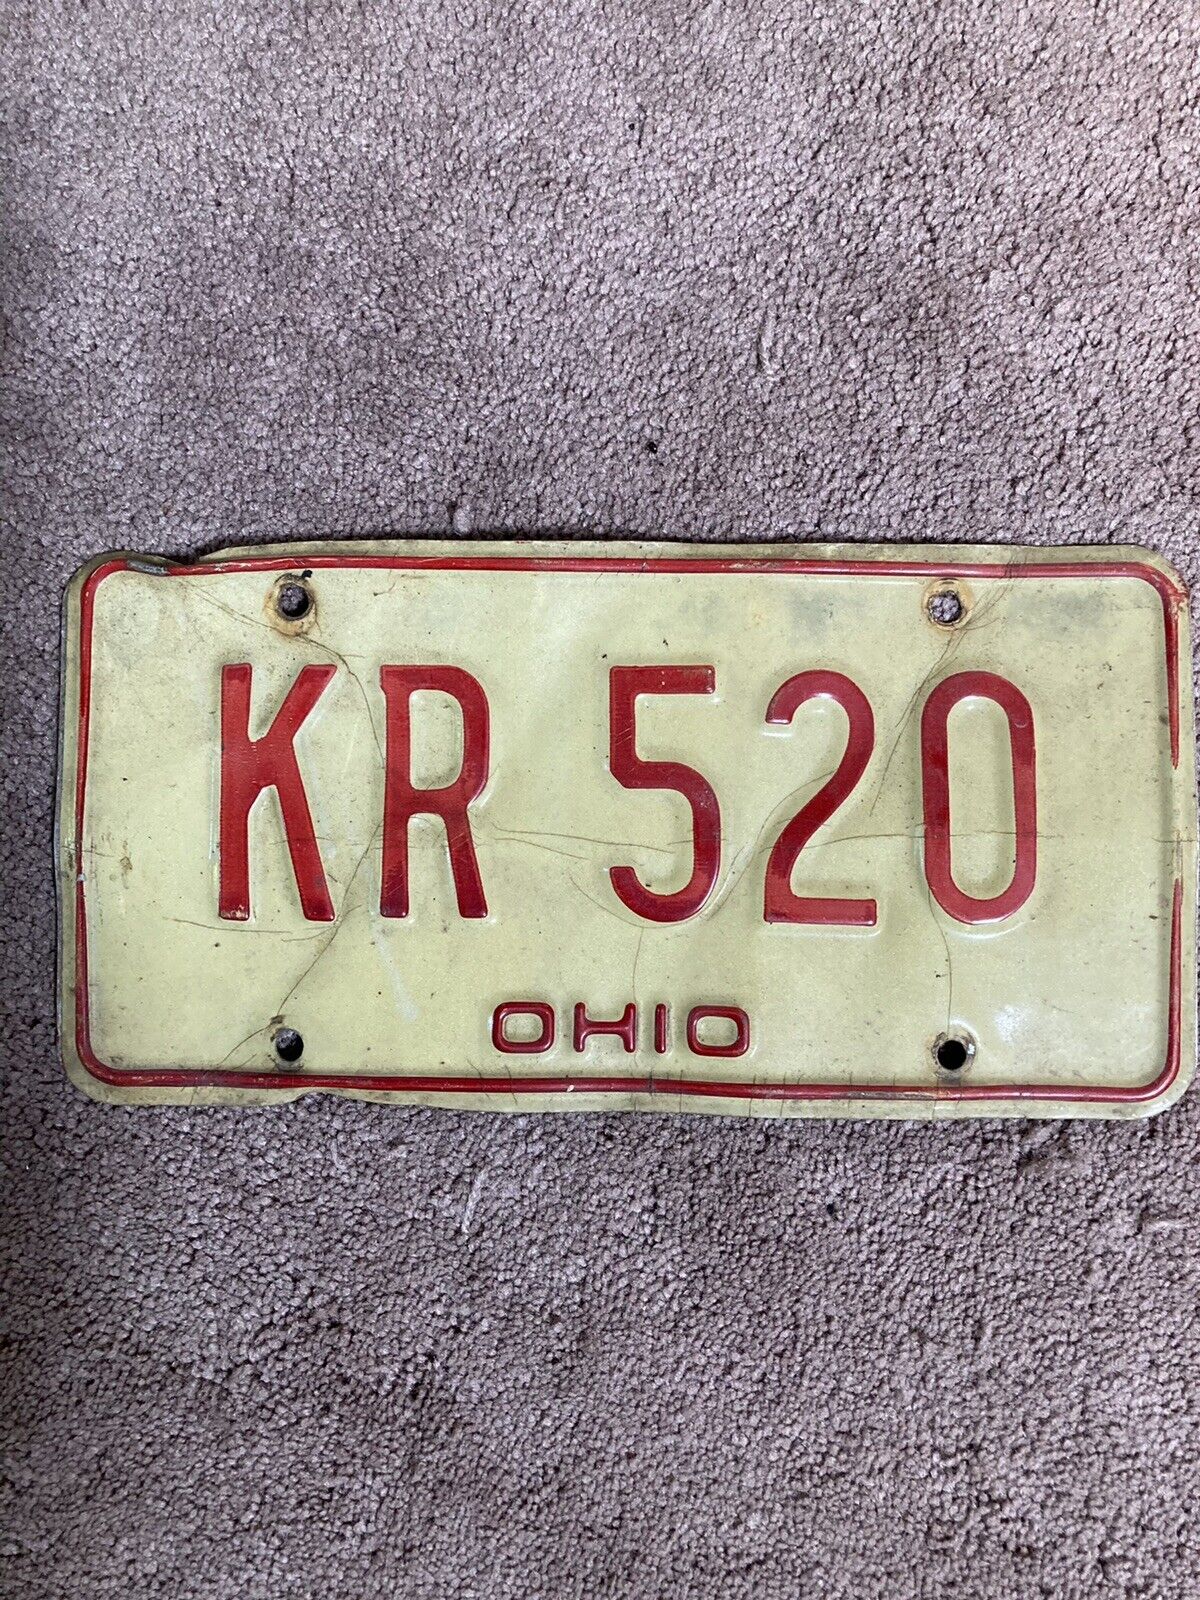 1976 Ohio License Plate - Kr 520 - Rustic